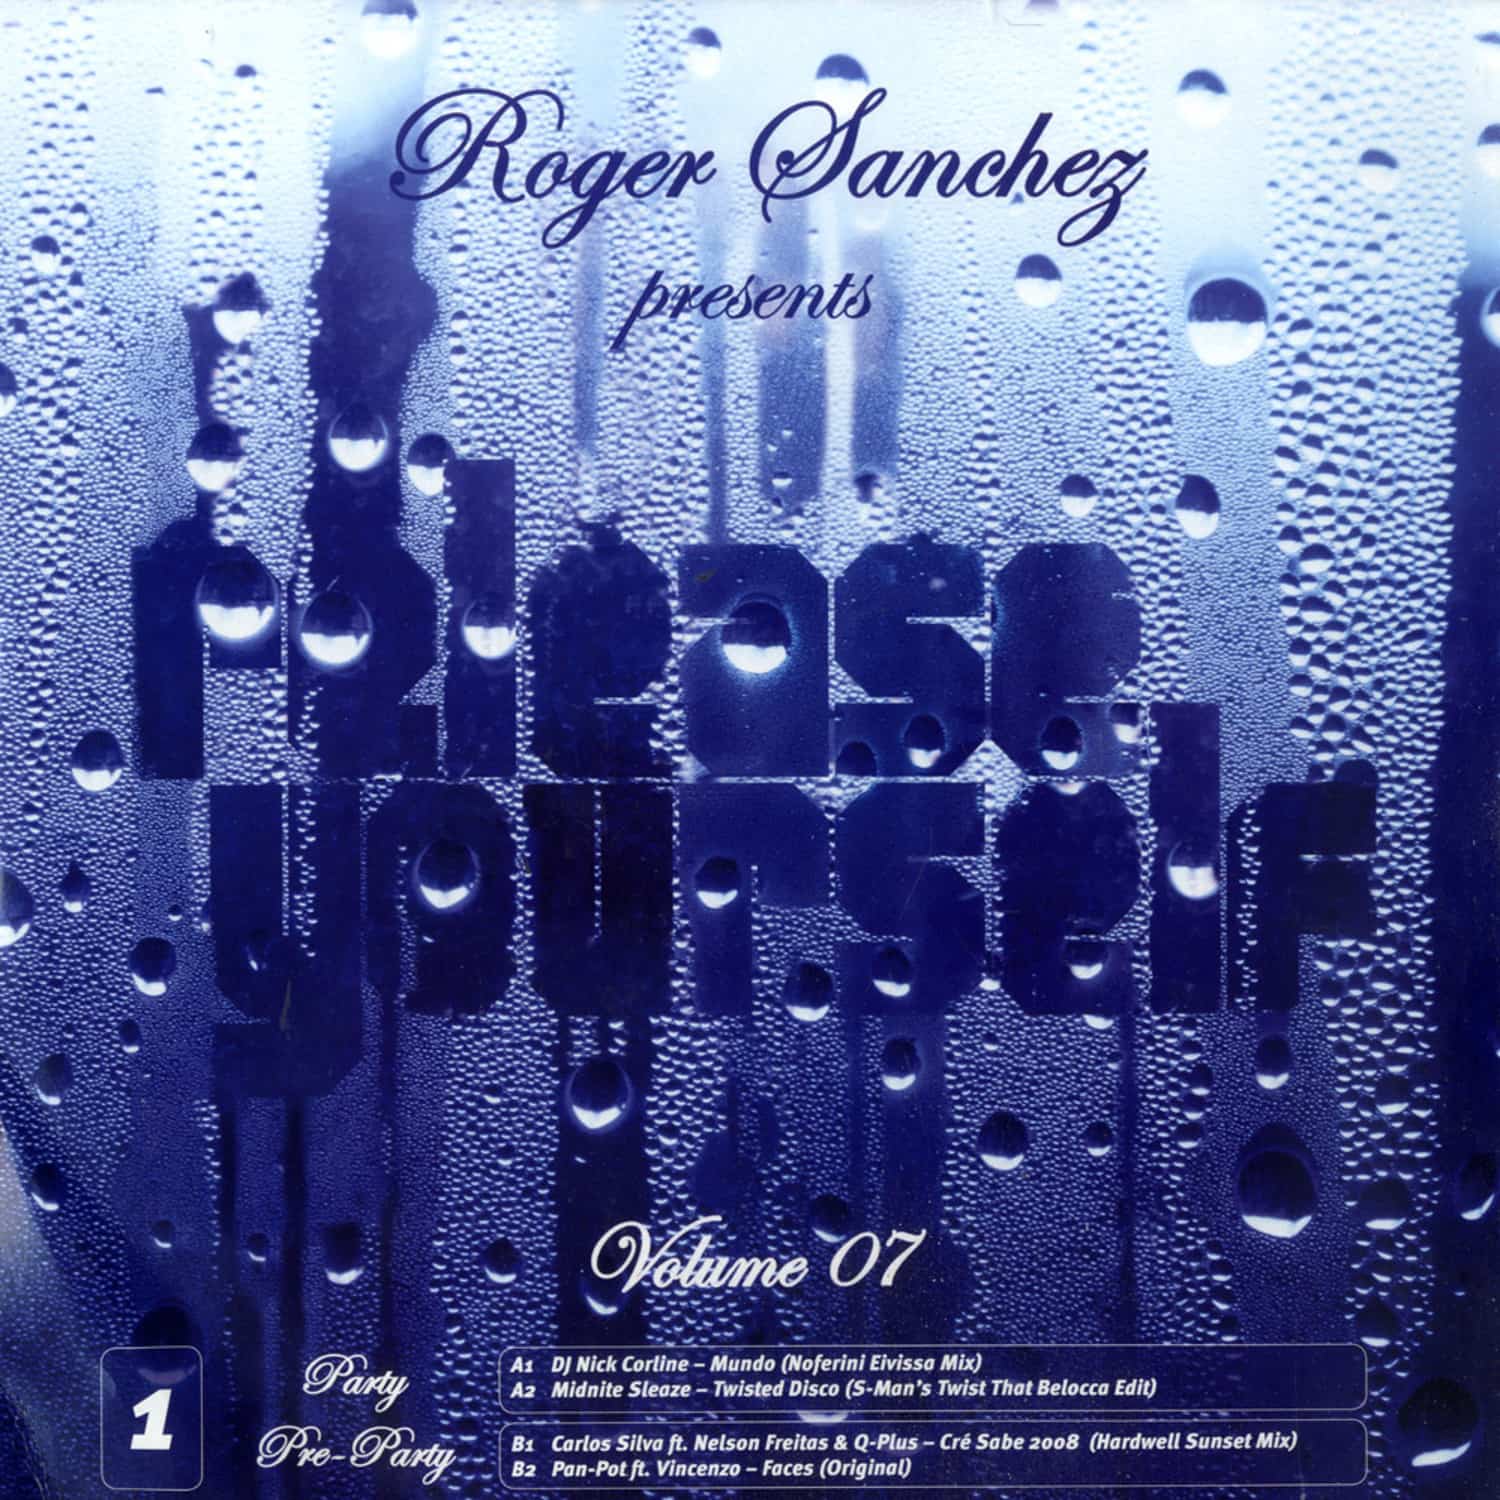 Roger Sanchez - RELEASE YOURSELF - VOL. 7 EP1